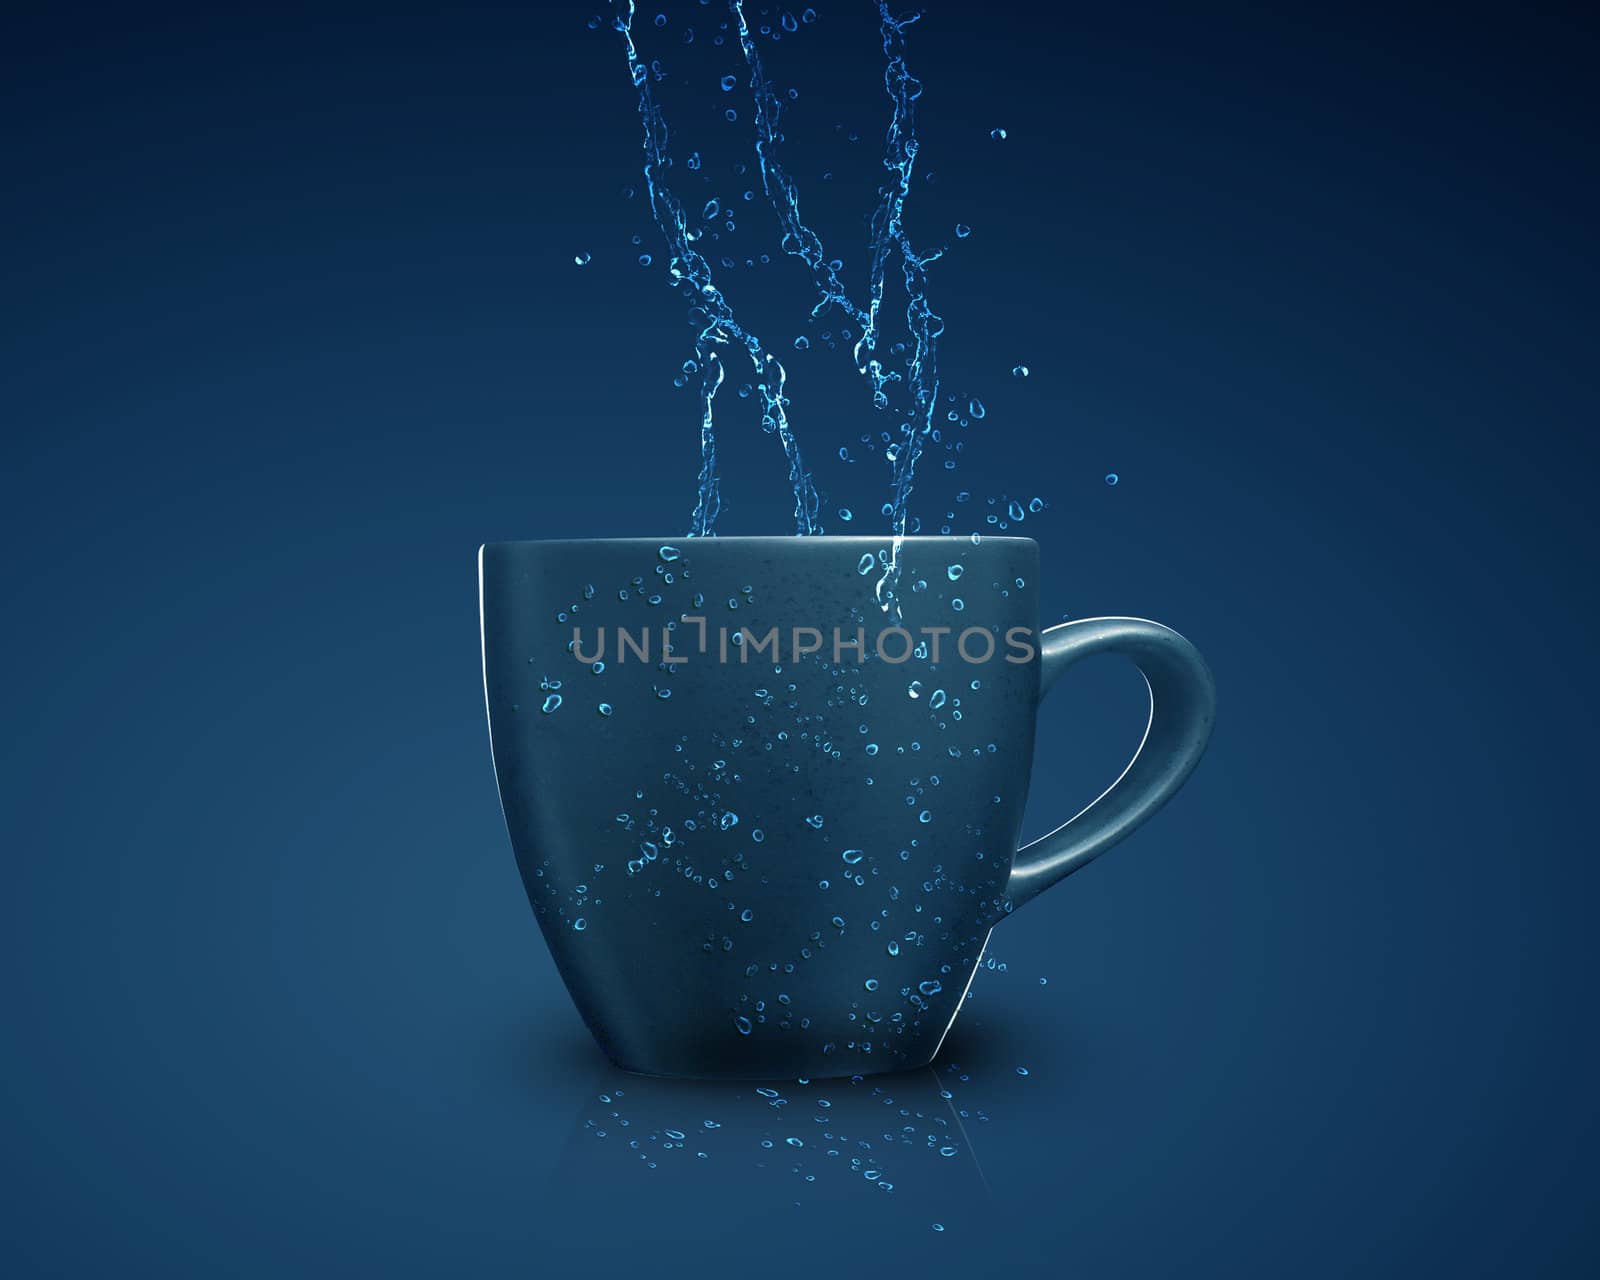 black mug with water splash on blue background.